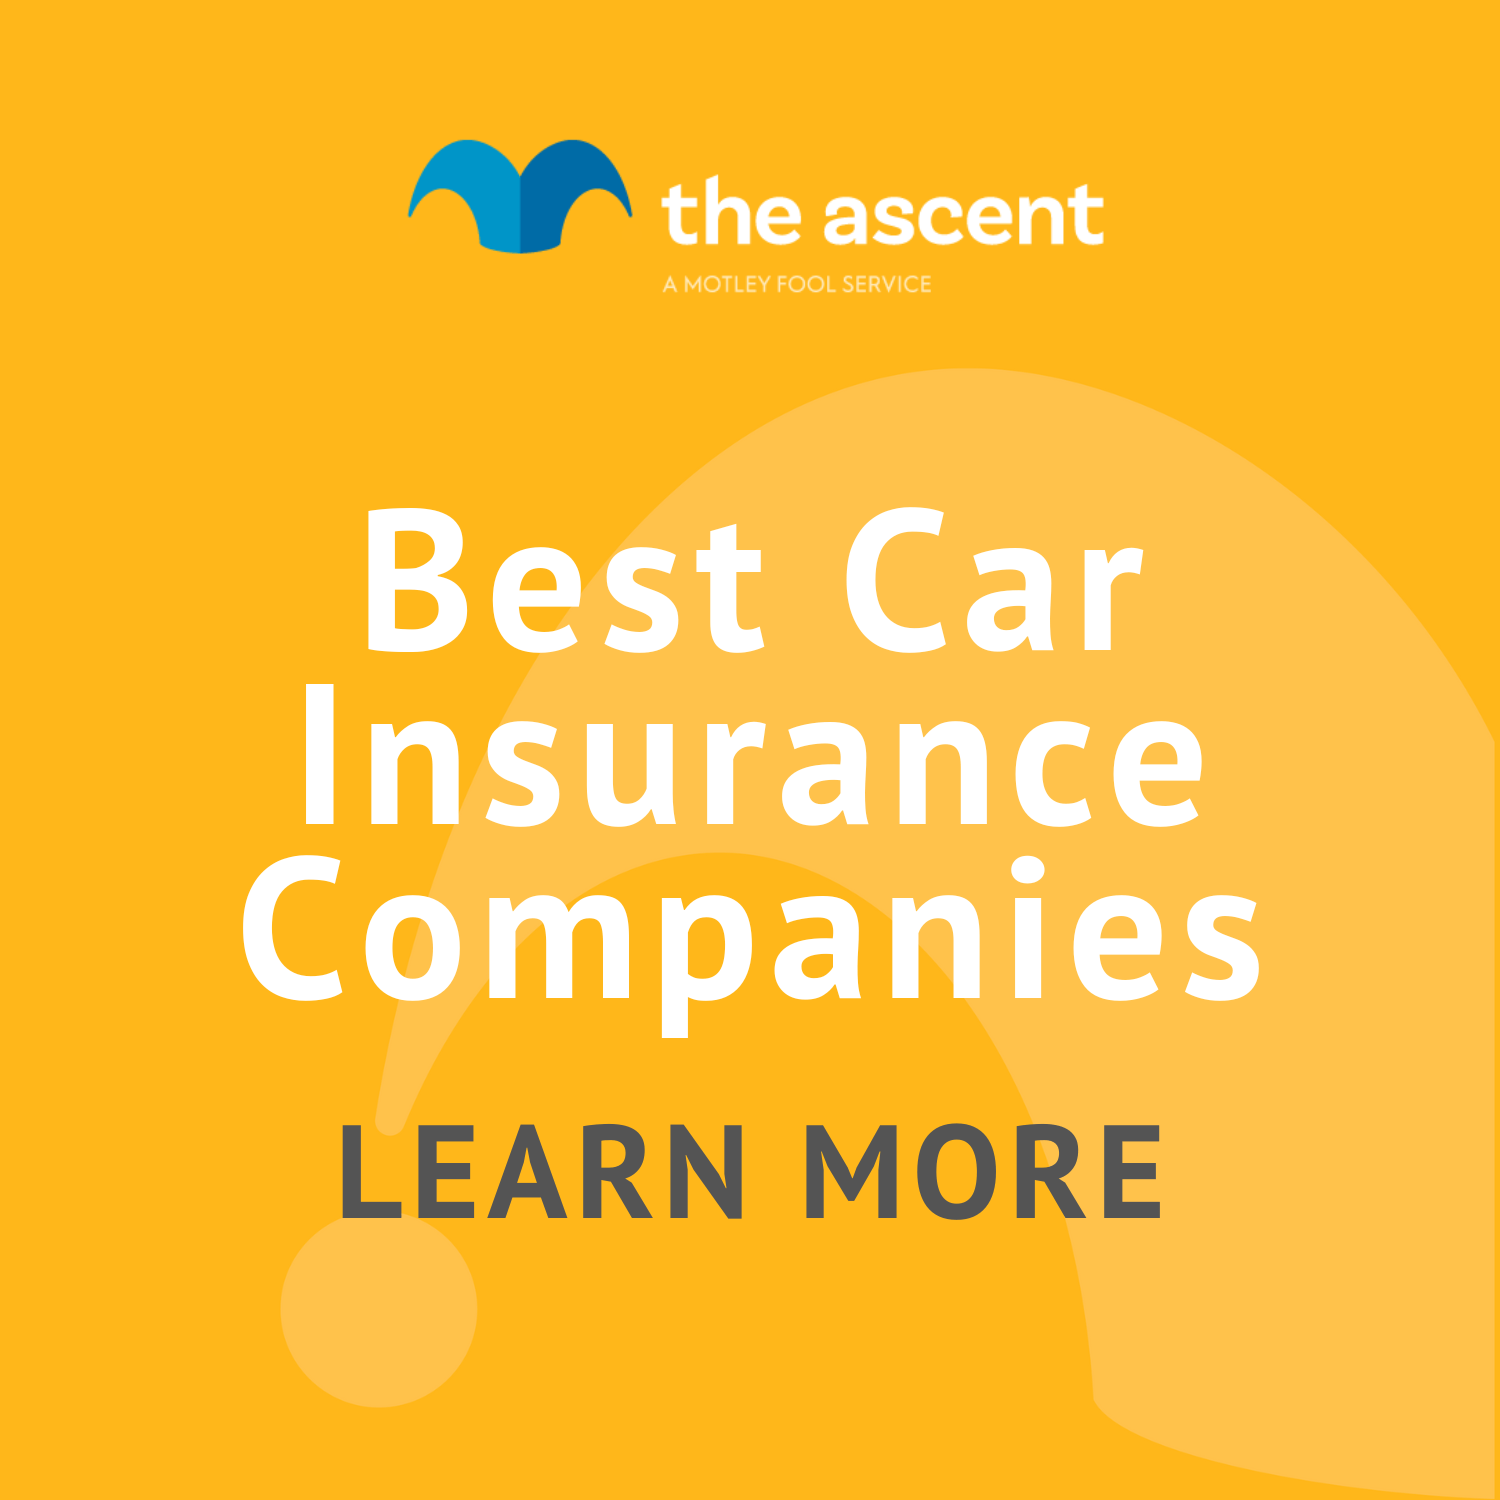 Best Car Insurance Rates